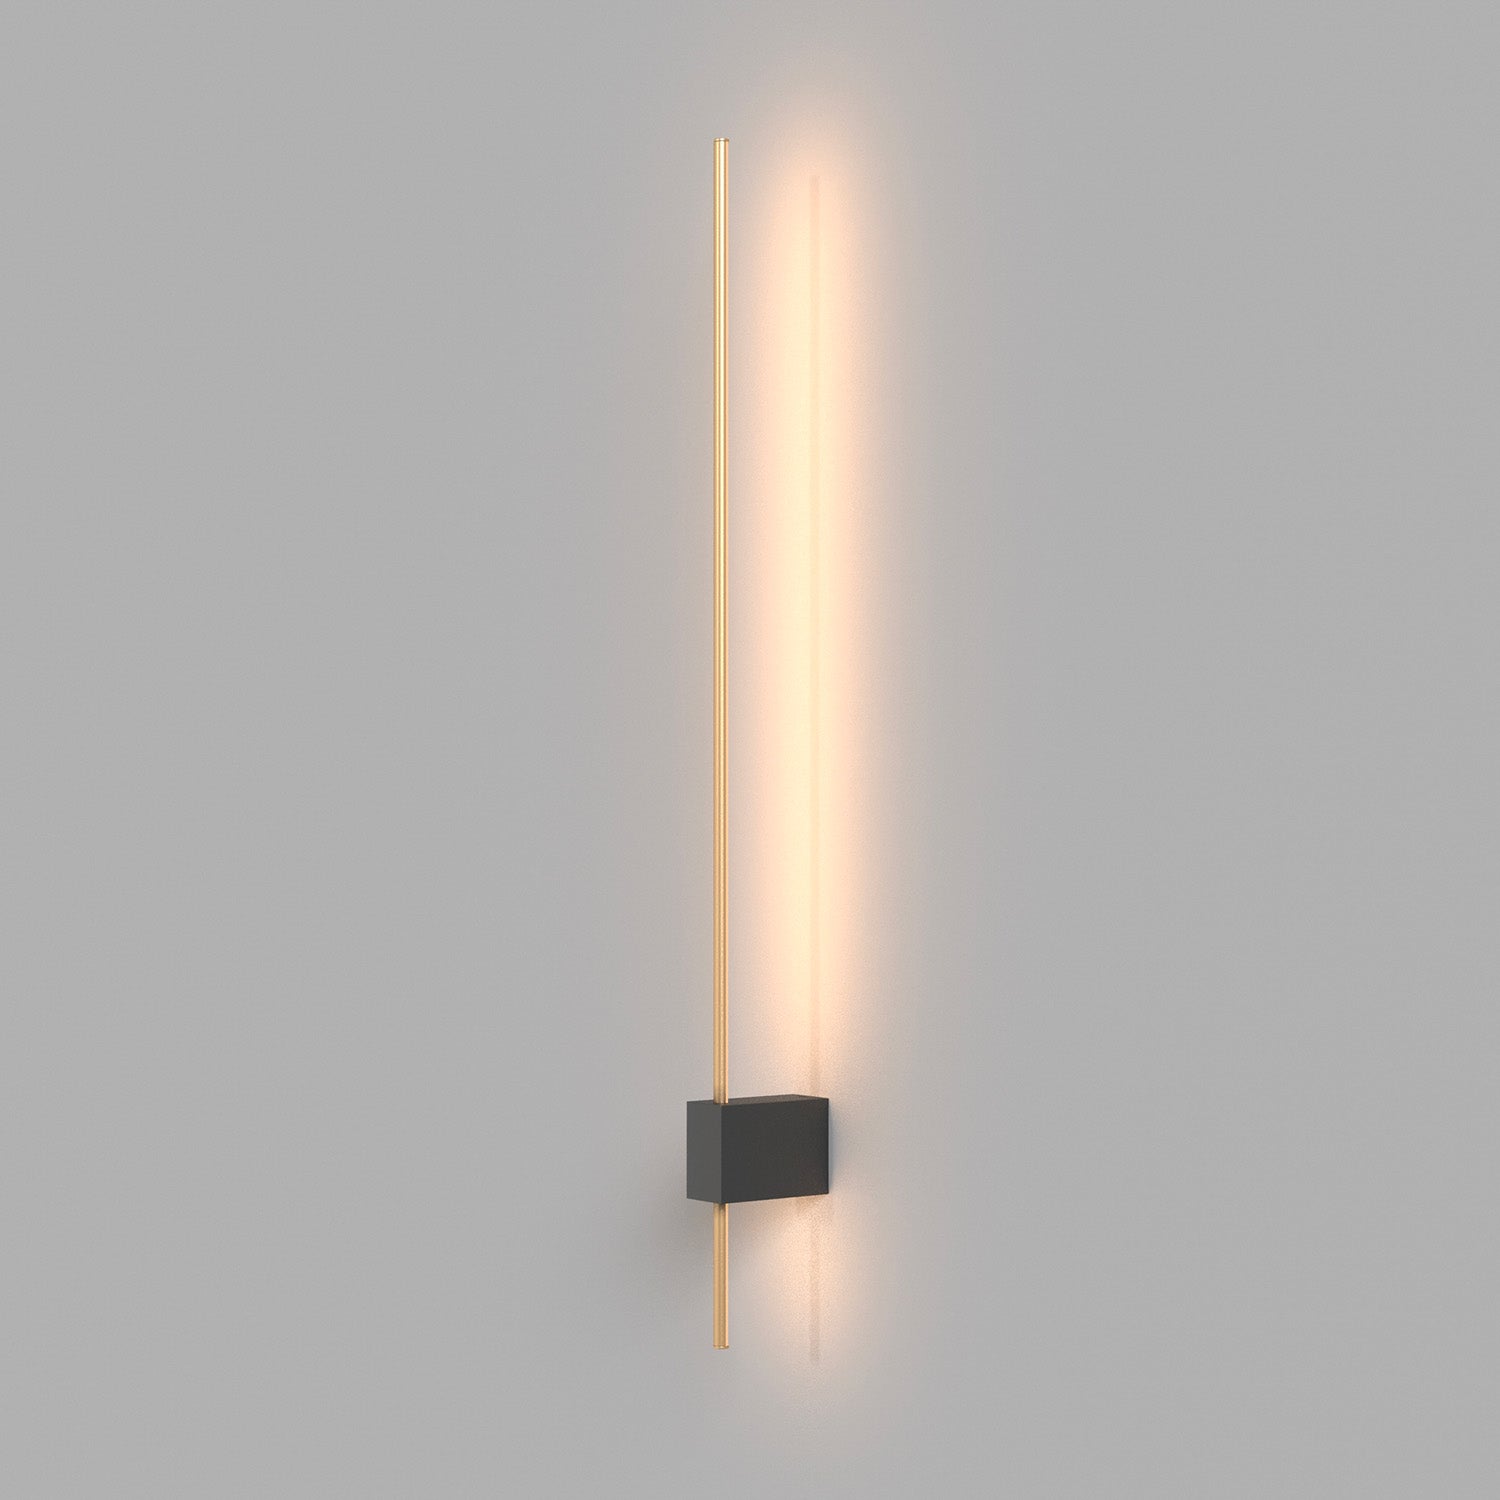 PARS A – Integrierte schlanke LED-Wandleuchte, Stabform